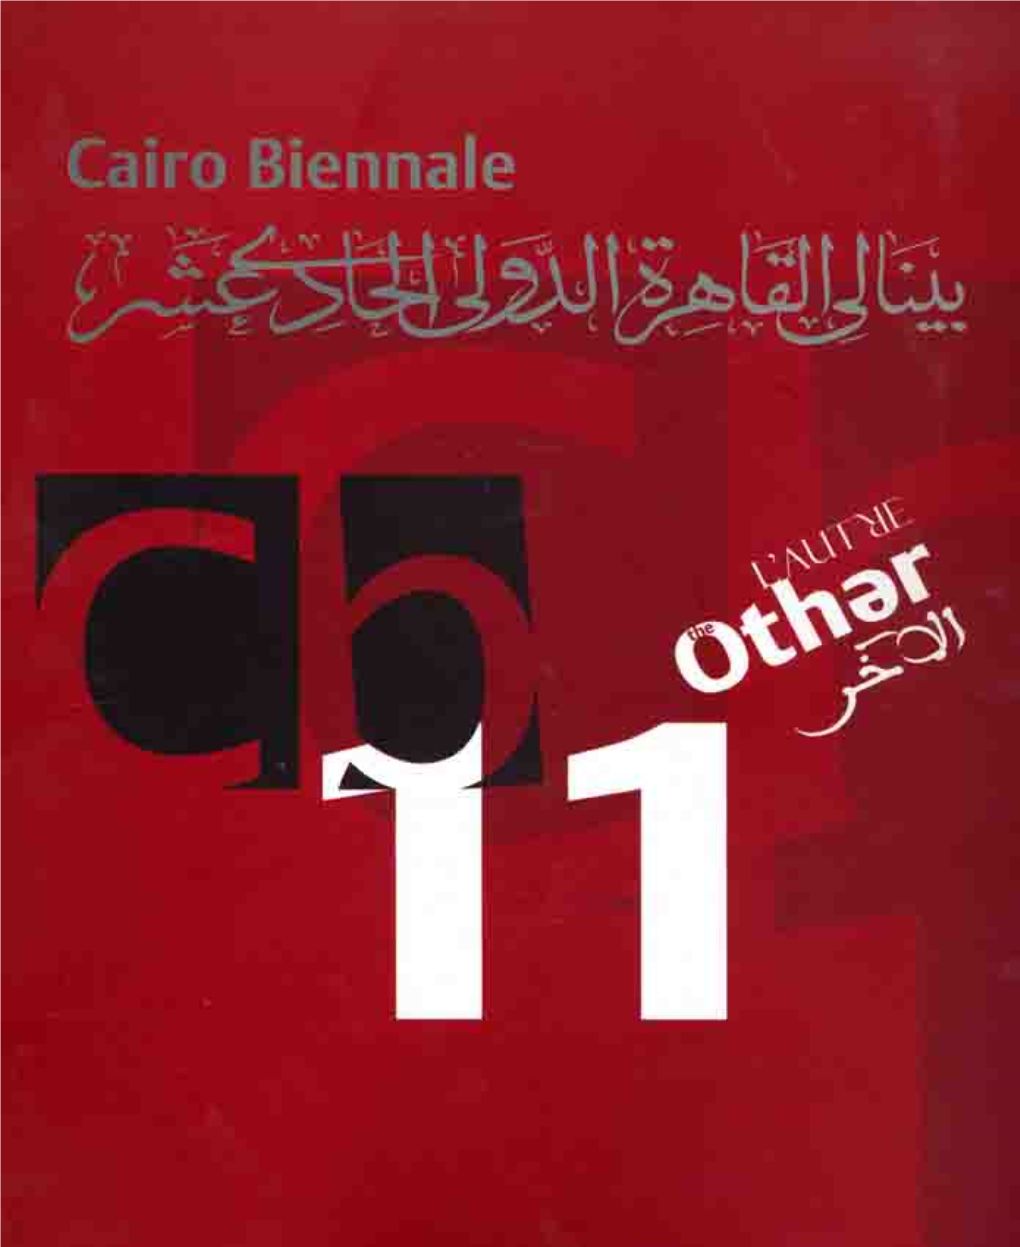 The 11Th Cairo International Biennale